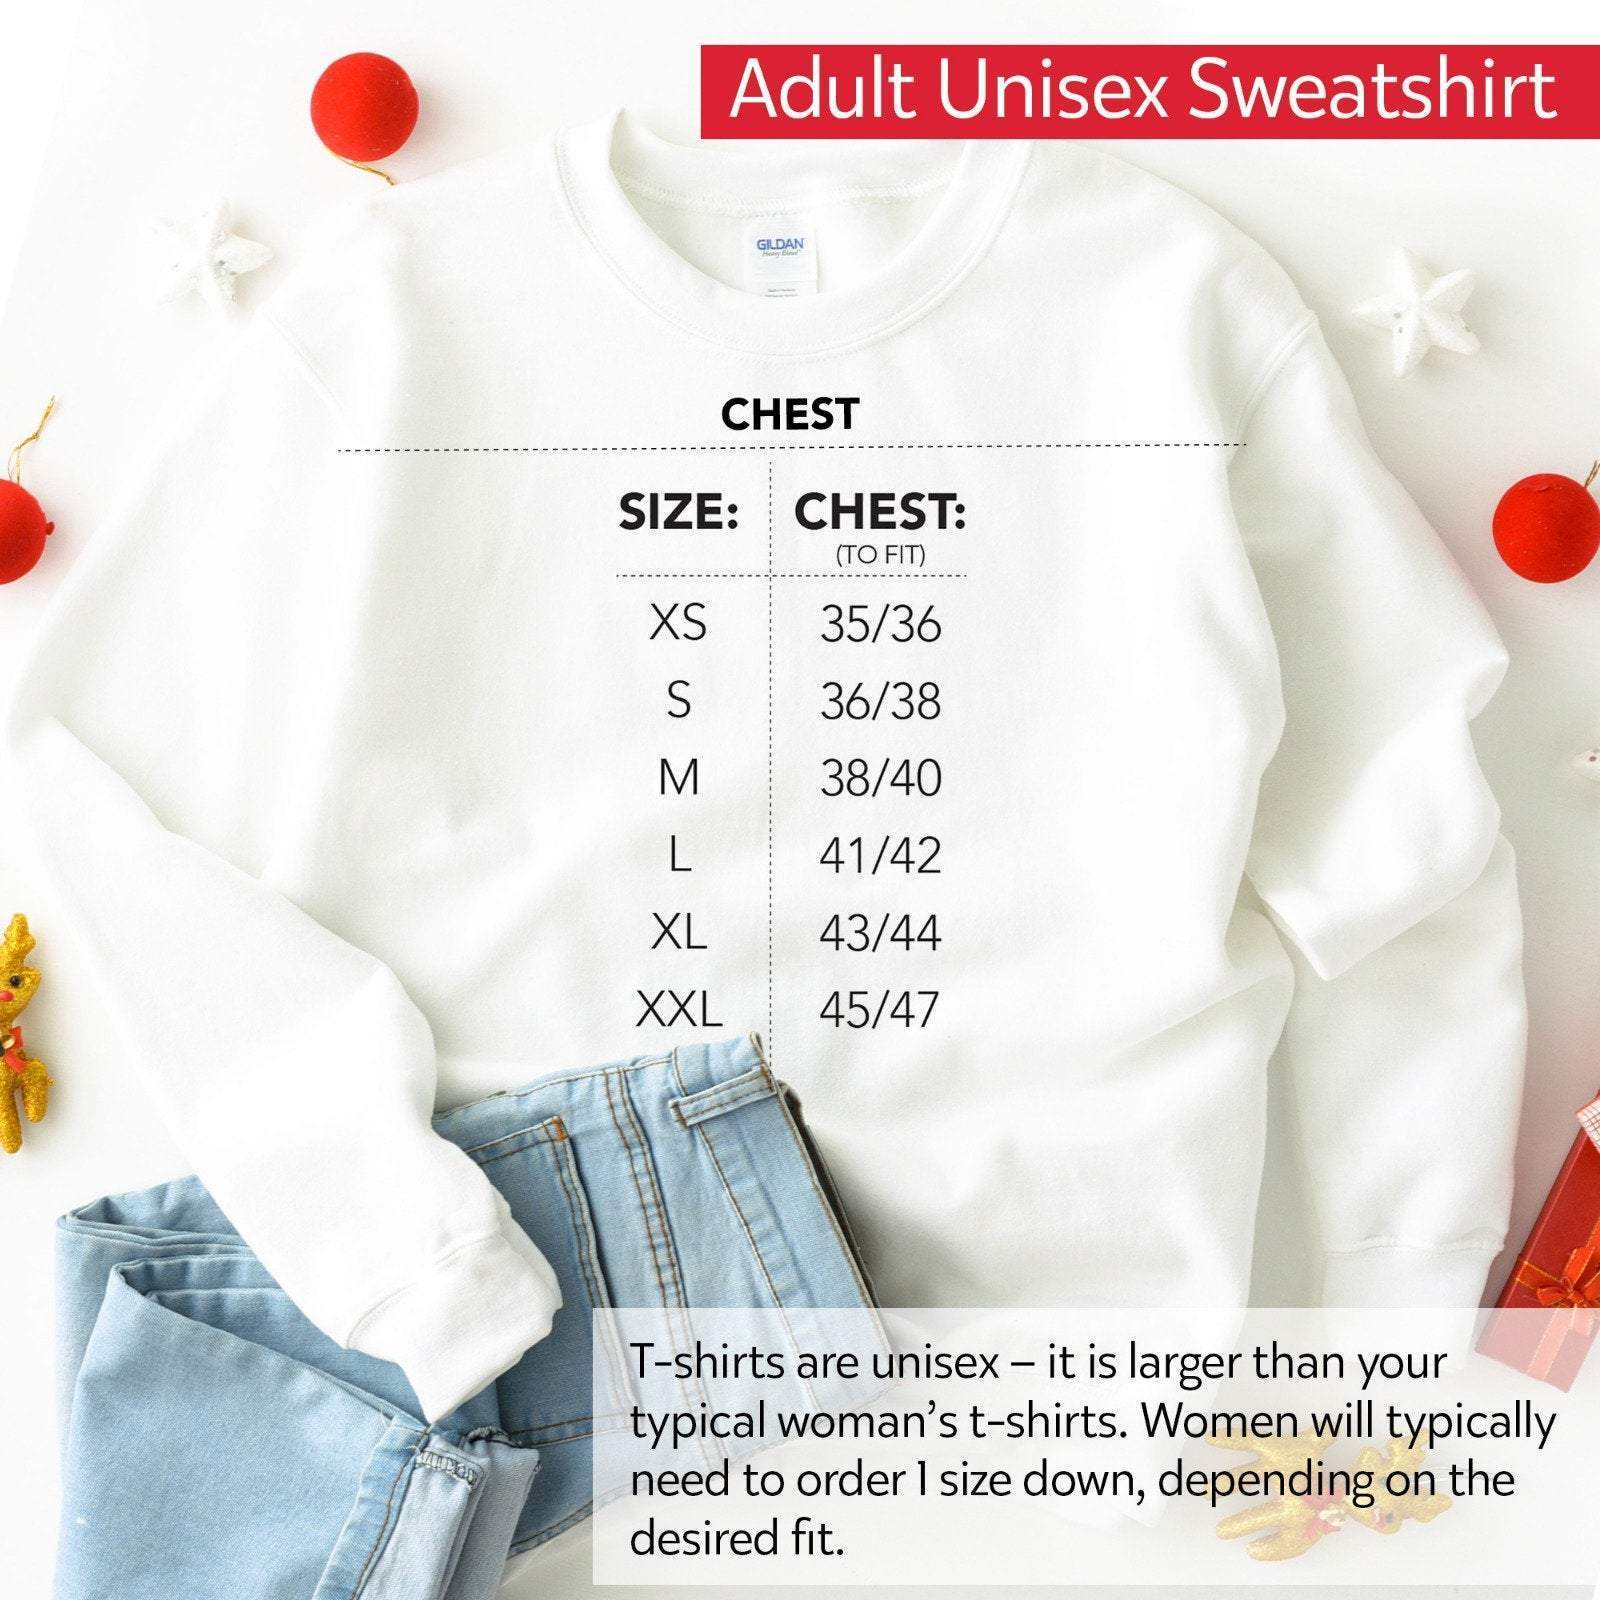 Joy Christmas Jumper, Unisex Adult & Kids sizes, Cosy Christmas Shirt for Women